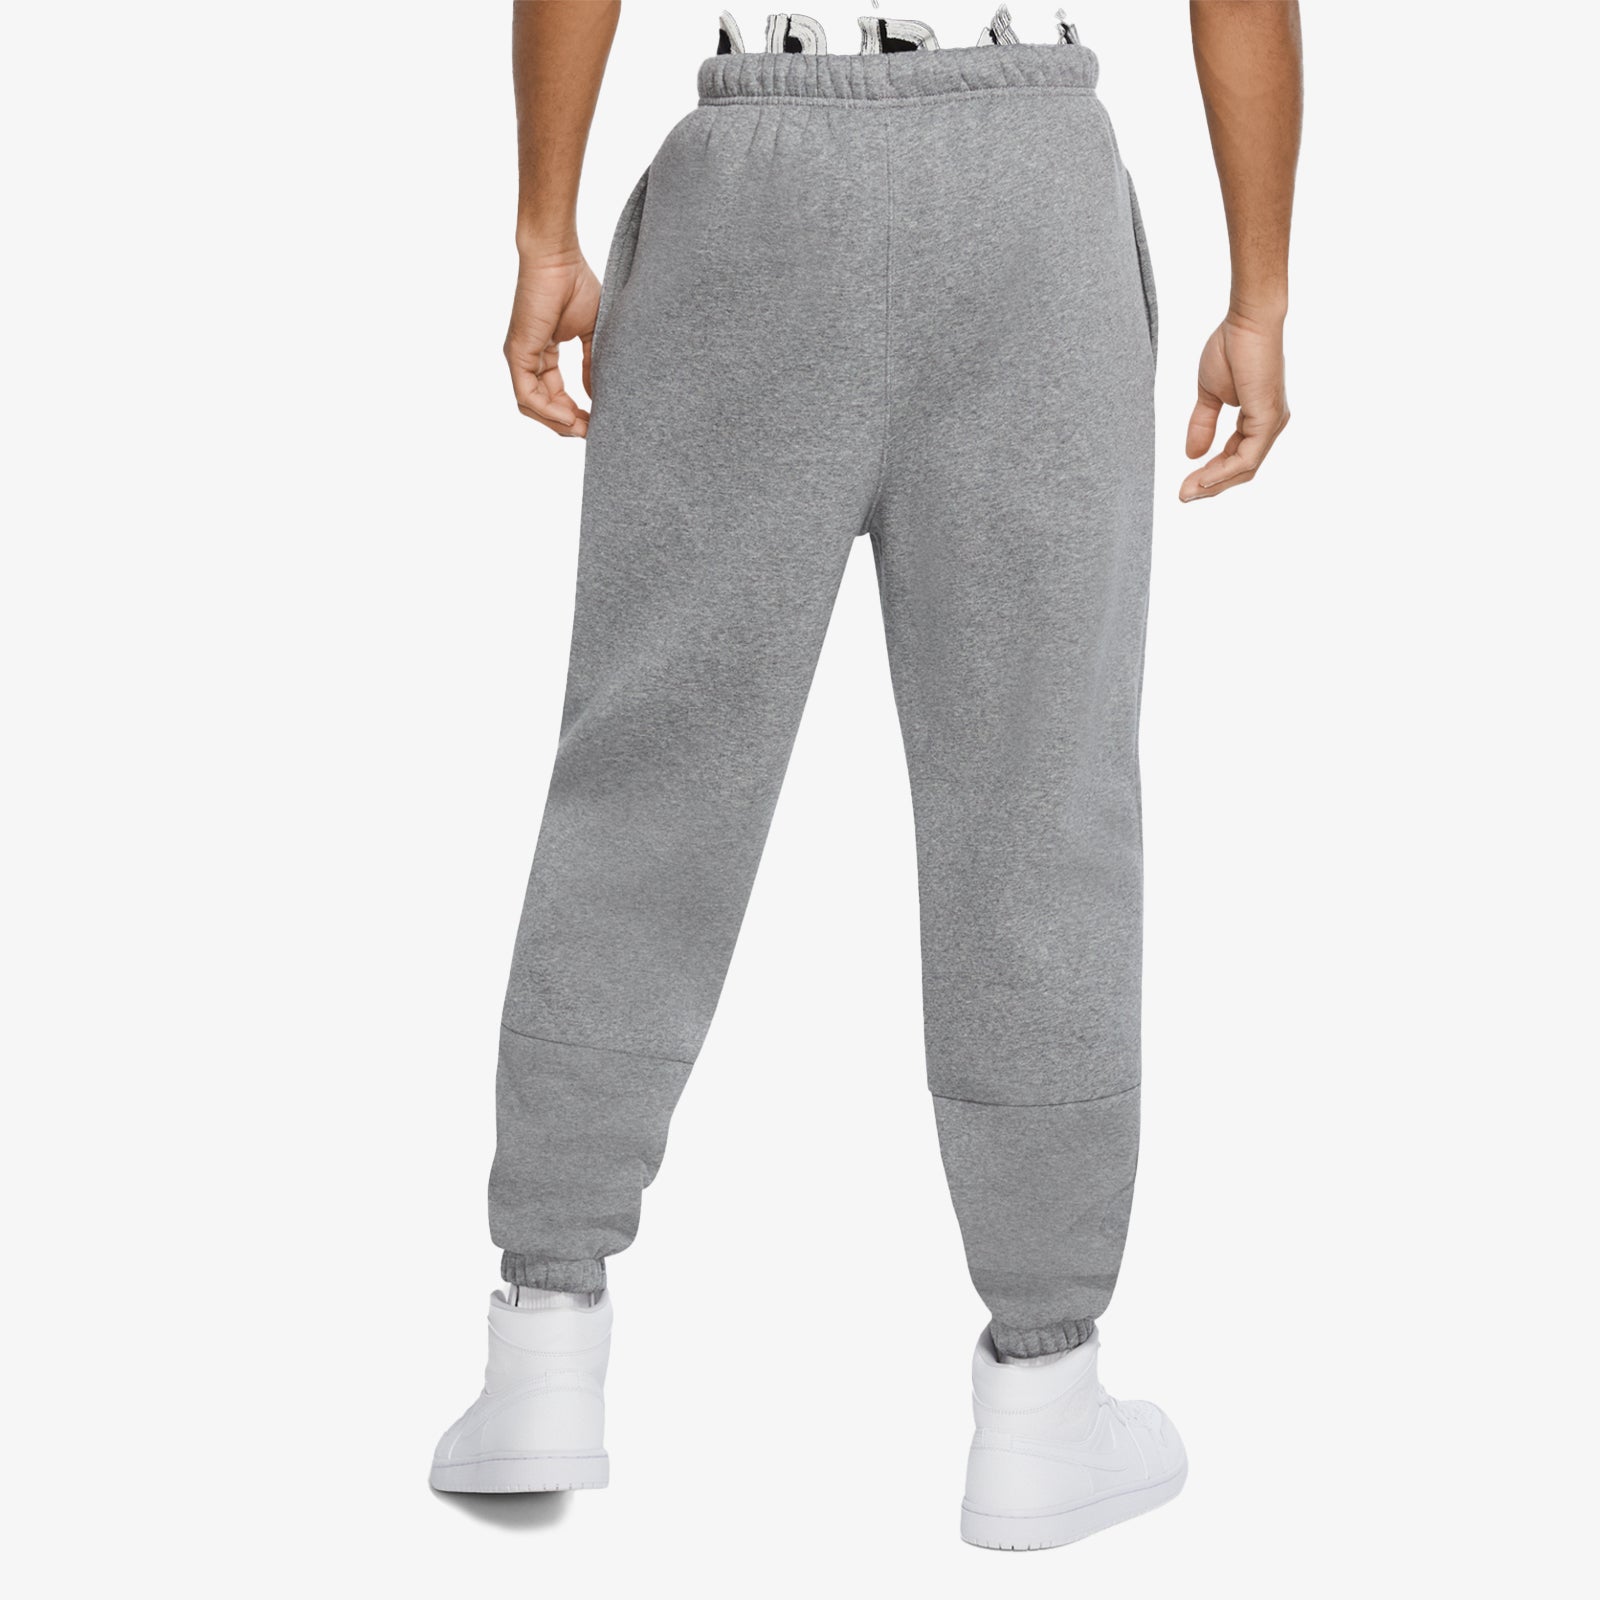 jordan grey pants